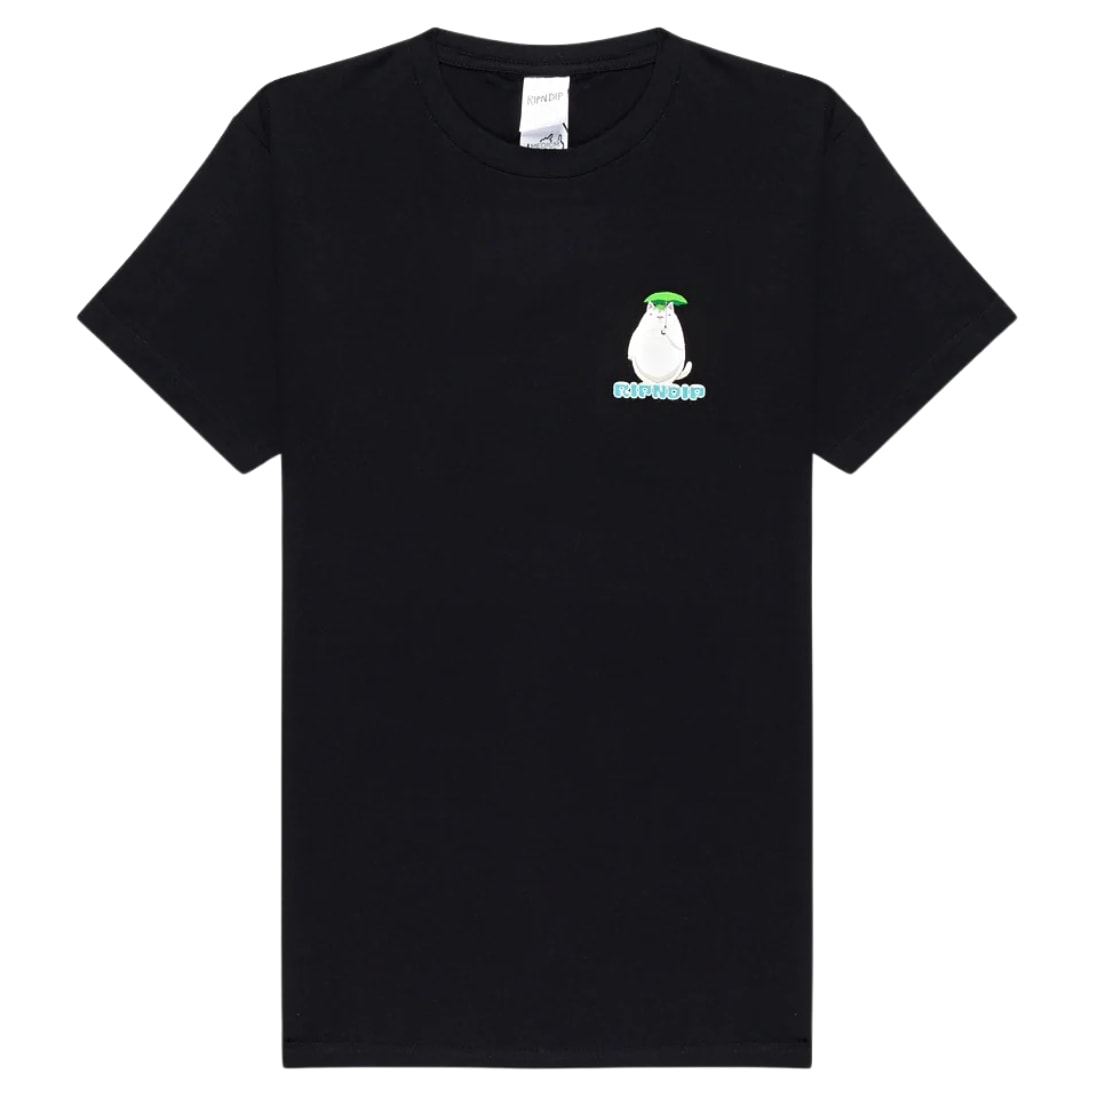 Ripndip Splish Splash T-Shirt - Black - Mens Graphic T-Shirt by RIPNDIP